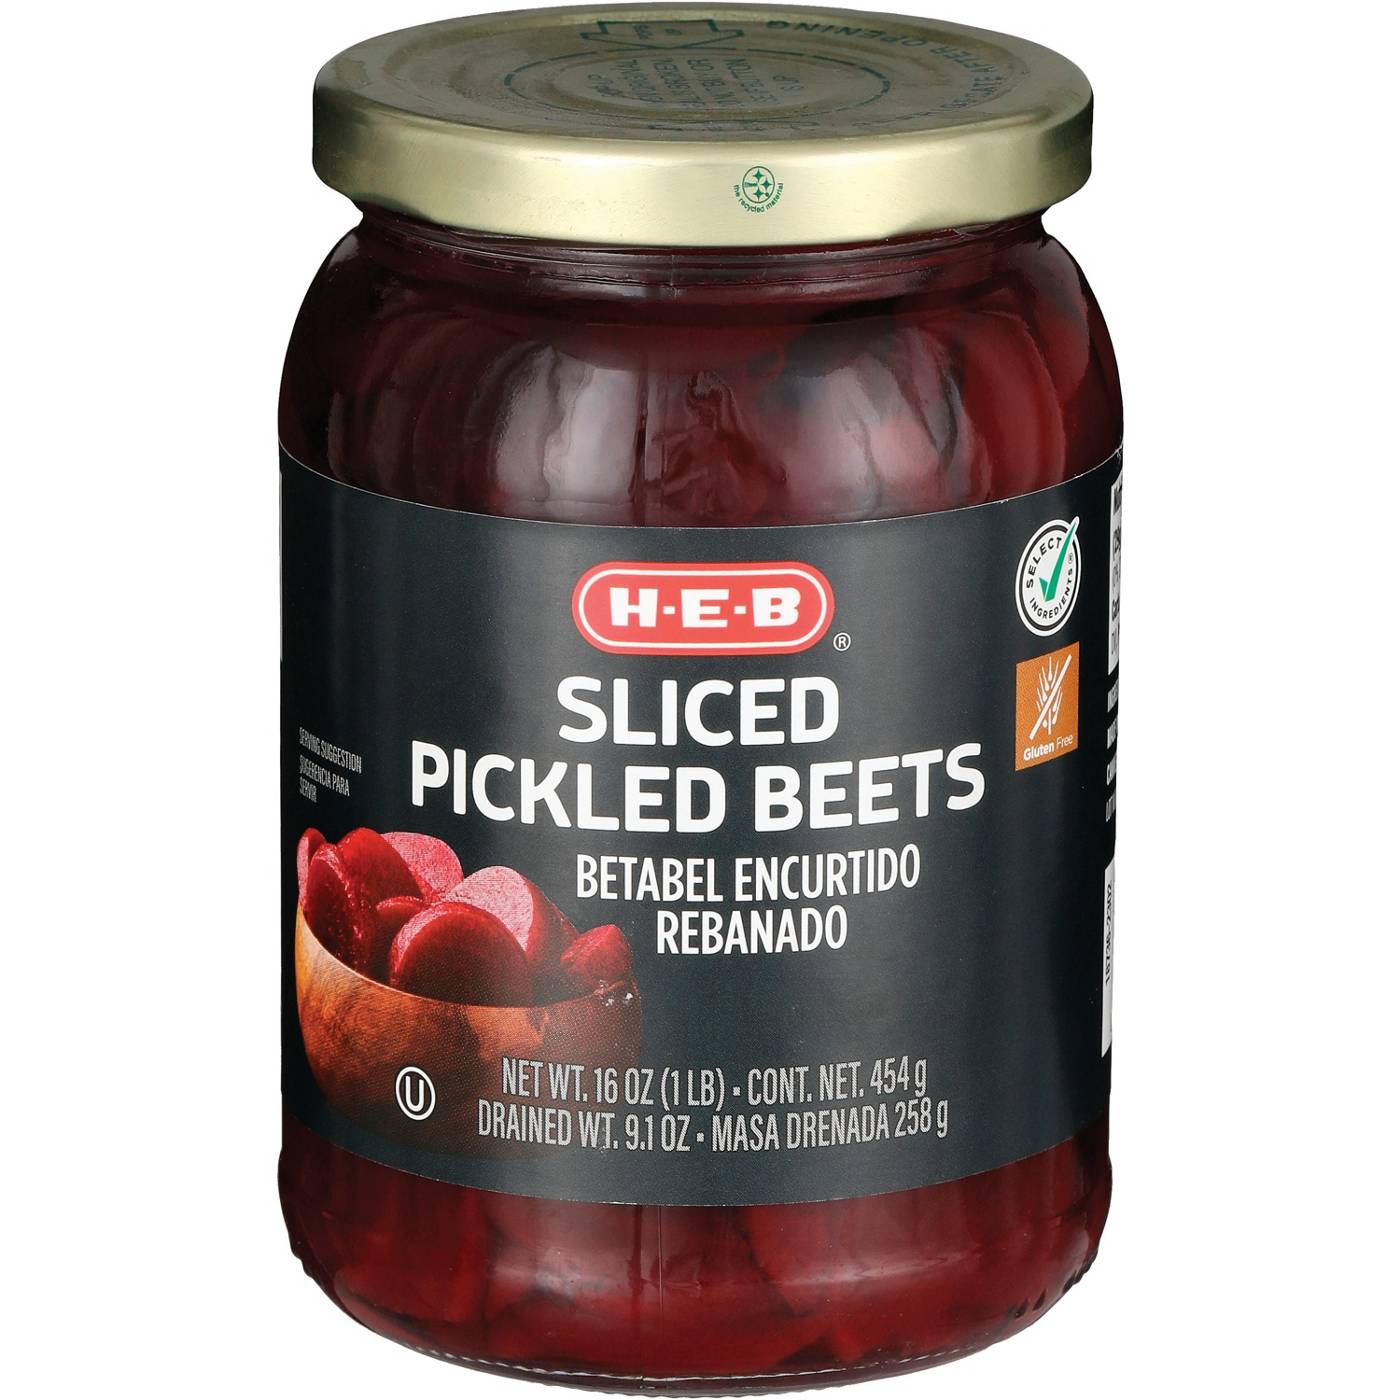 H-E-B Sliced Pickled Beets; image 2 of 2